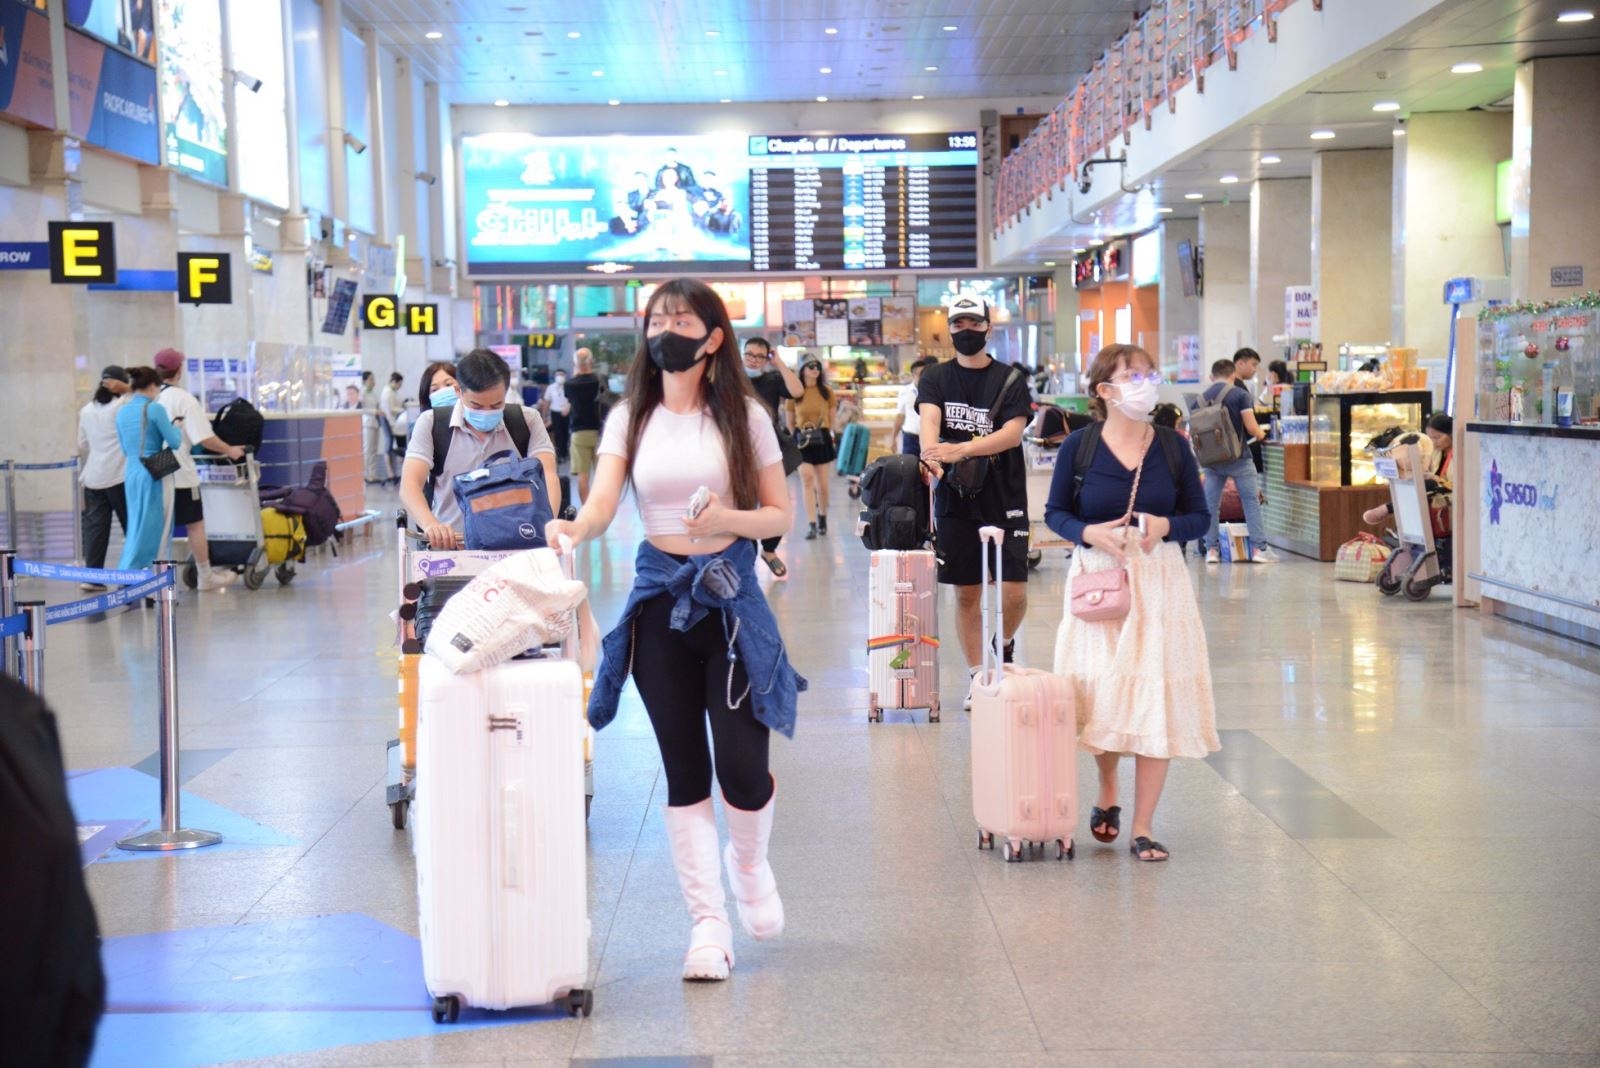 Количество пассажиров, летавших через аэропорт Таншоннят, увеличилось до рекордно высокого уровня после COVID-19